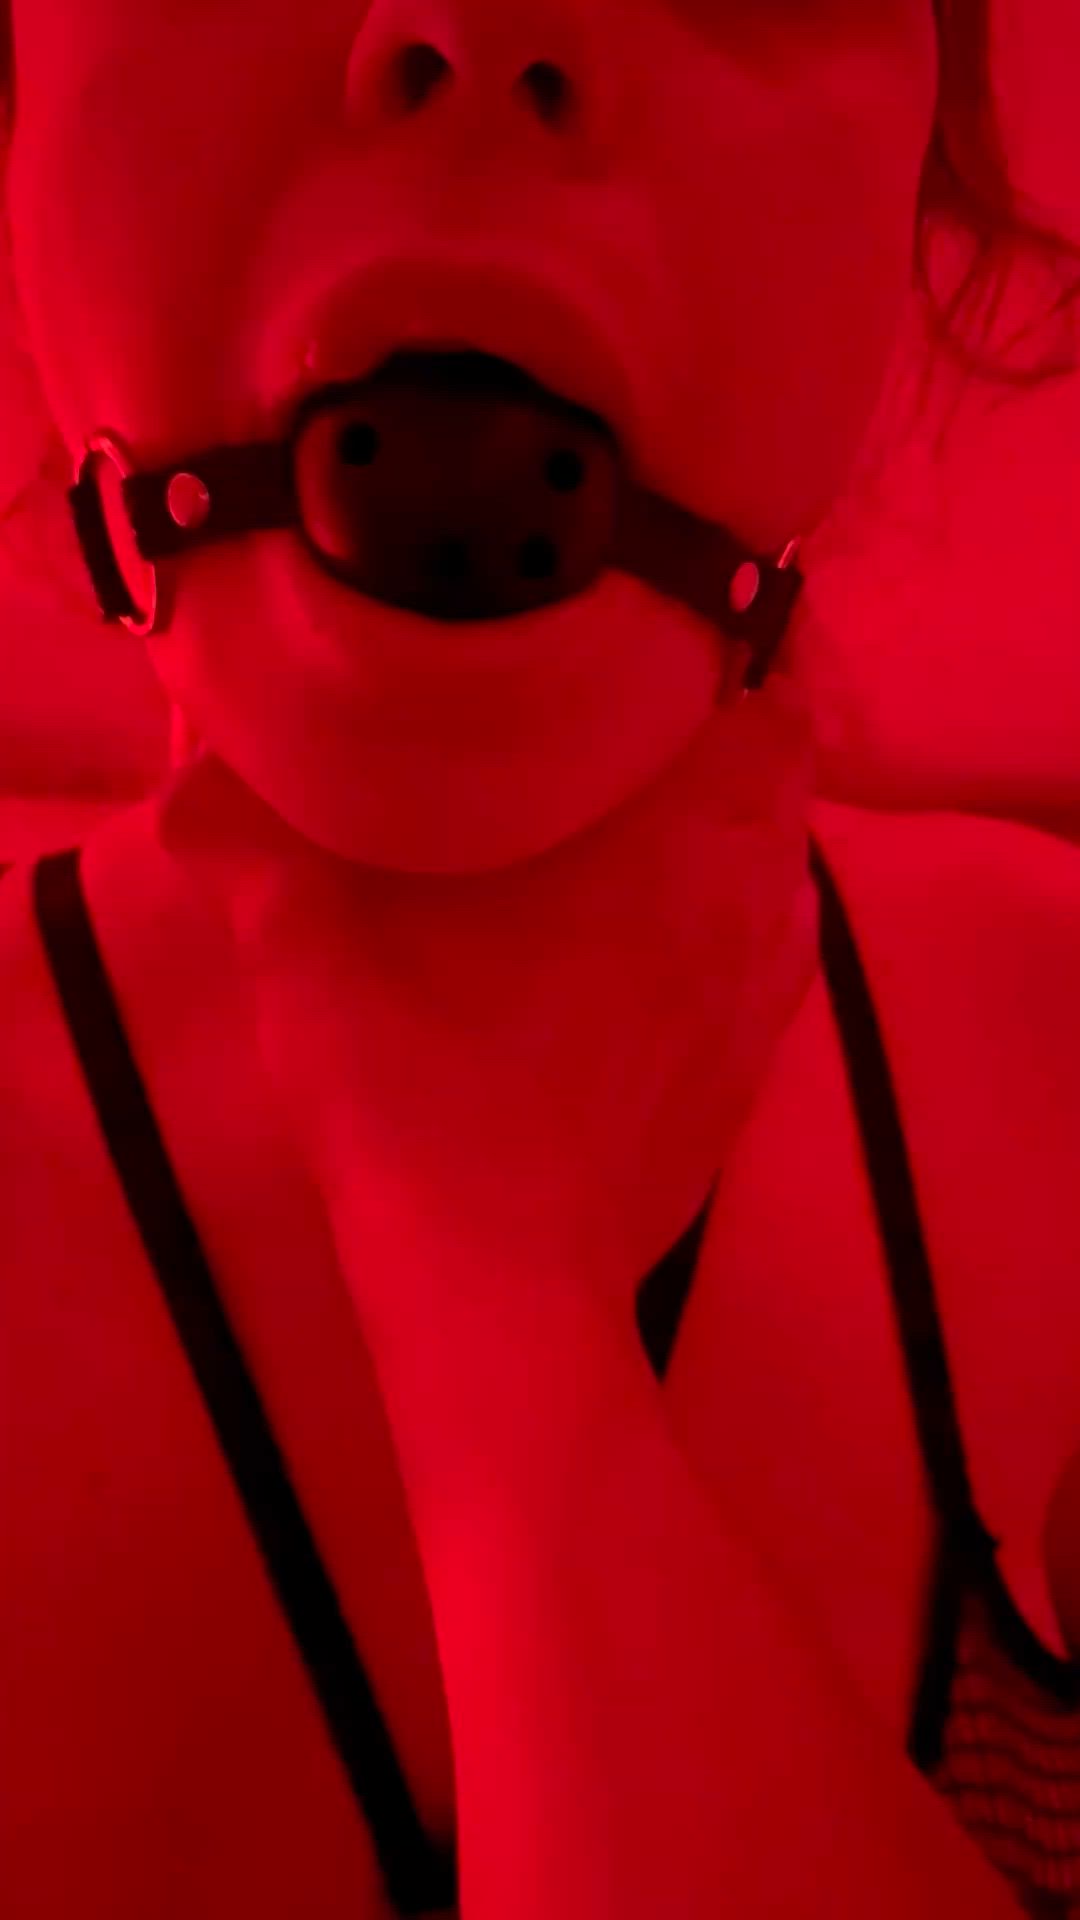 BDSM porn video with onlyfans model deborahredhair69 <strong>@redhair_deborah</strong>